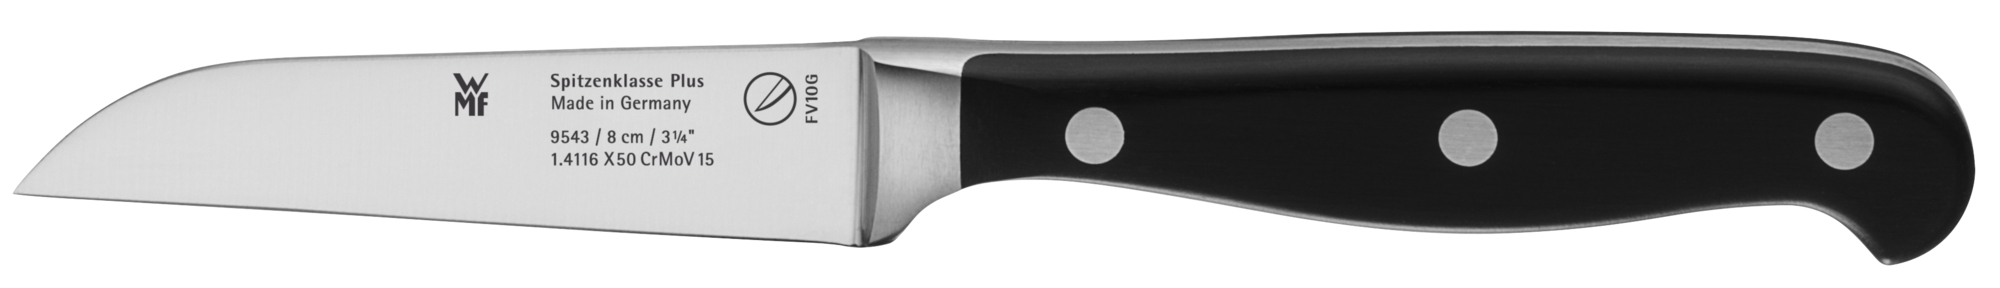 Овощной нож Spitzenklasse Plus 8 см